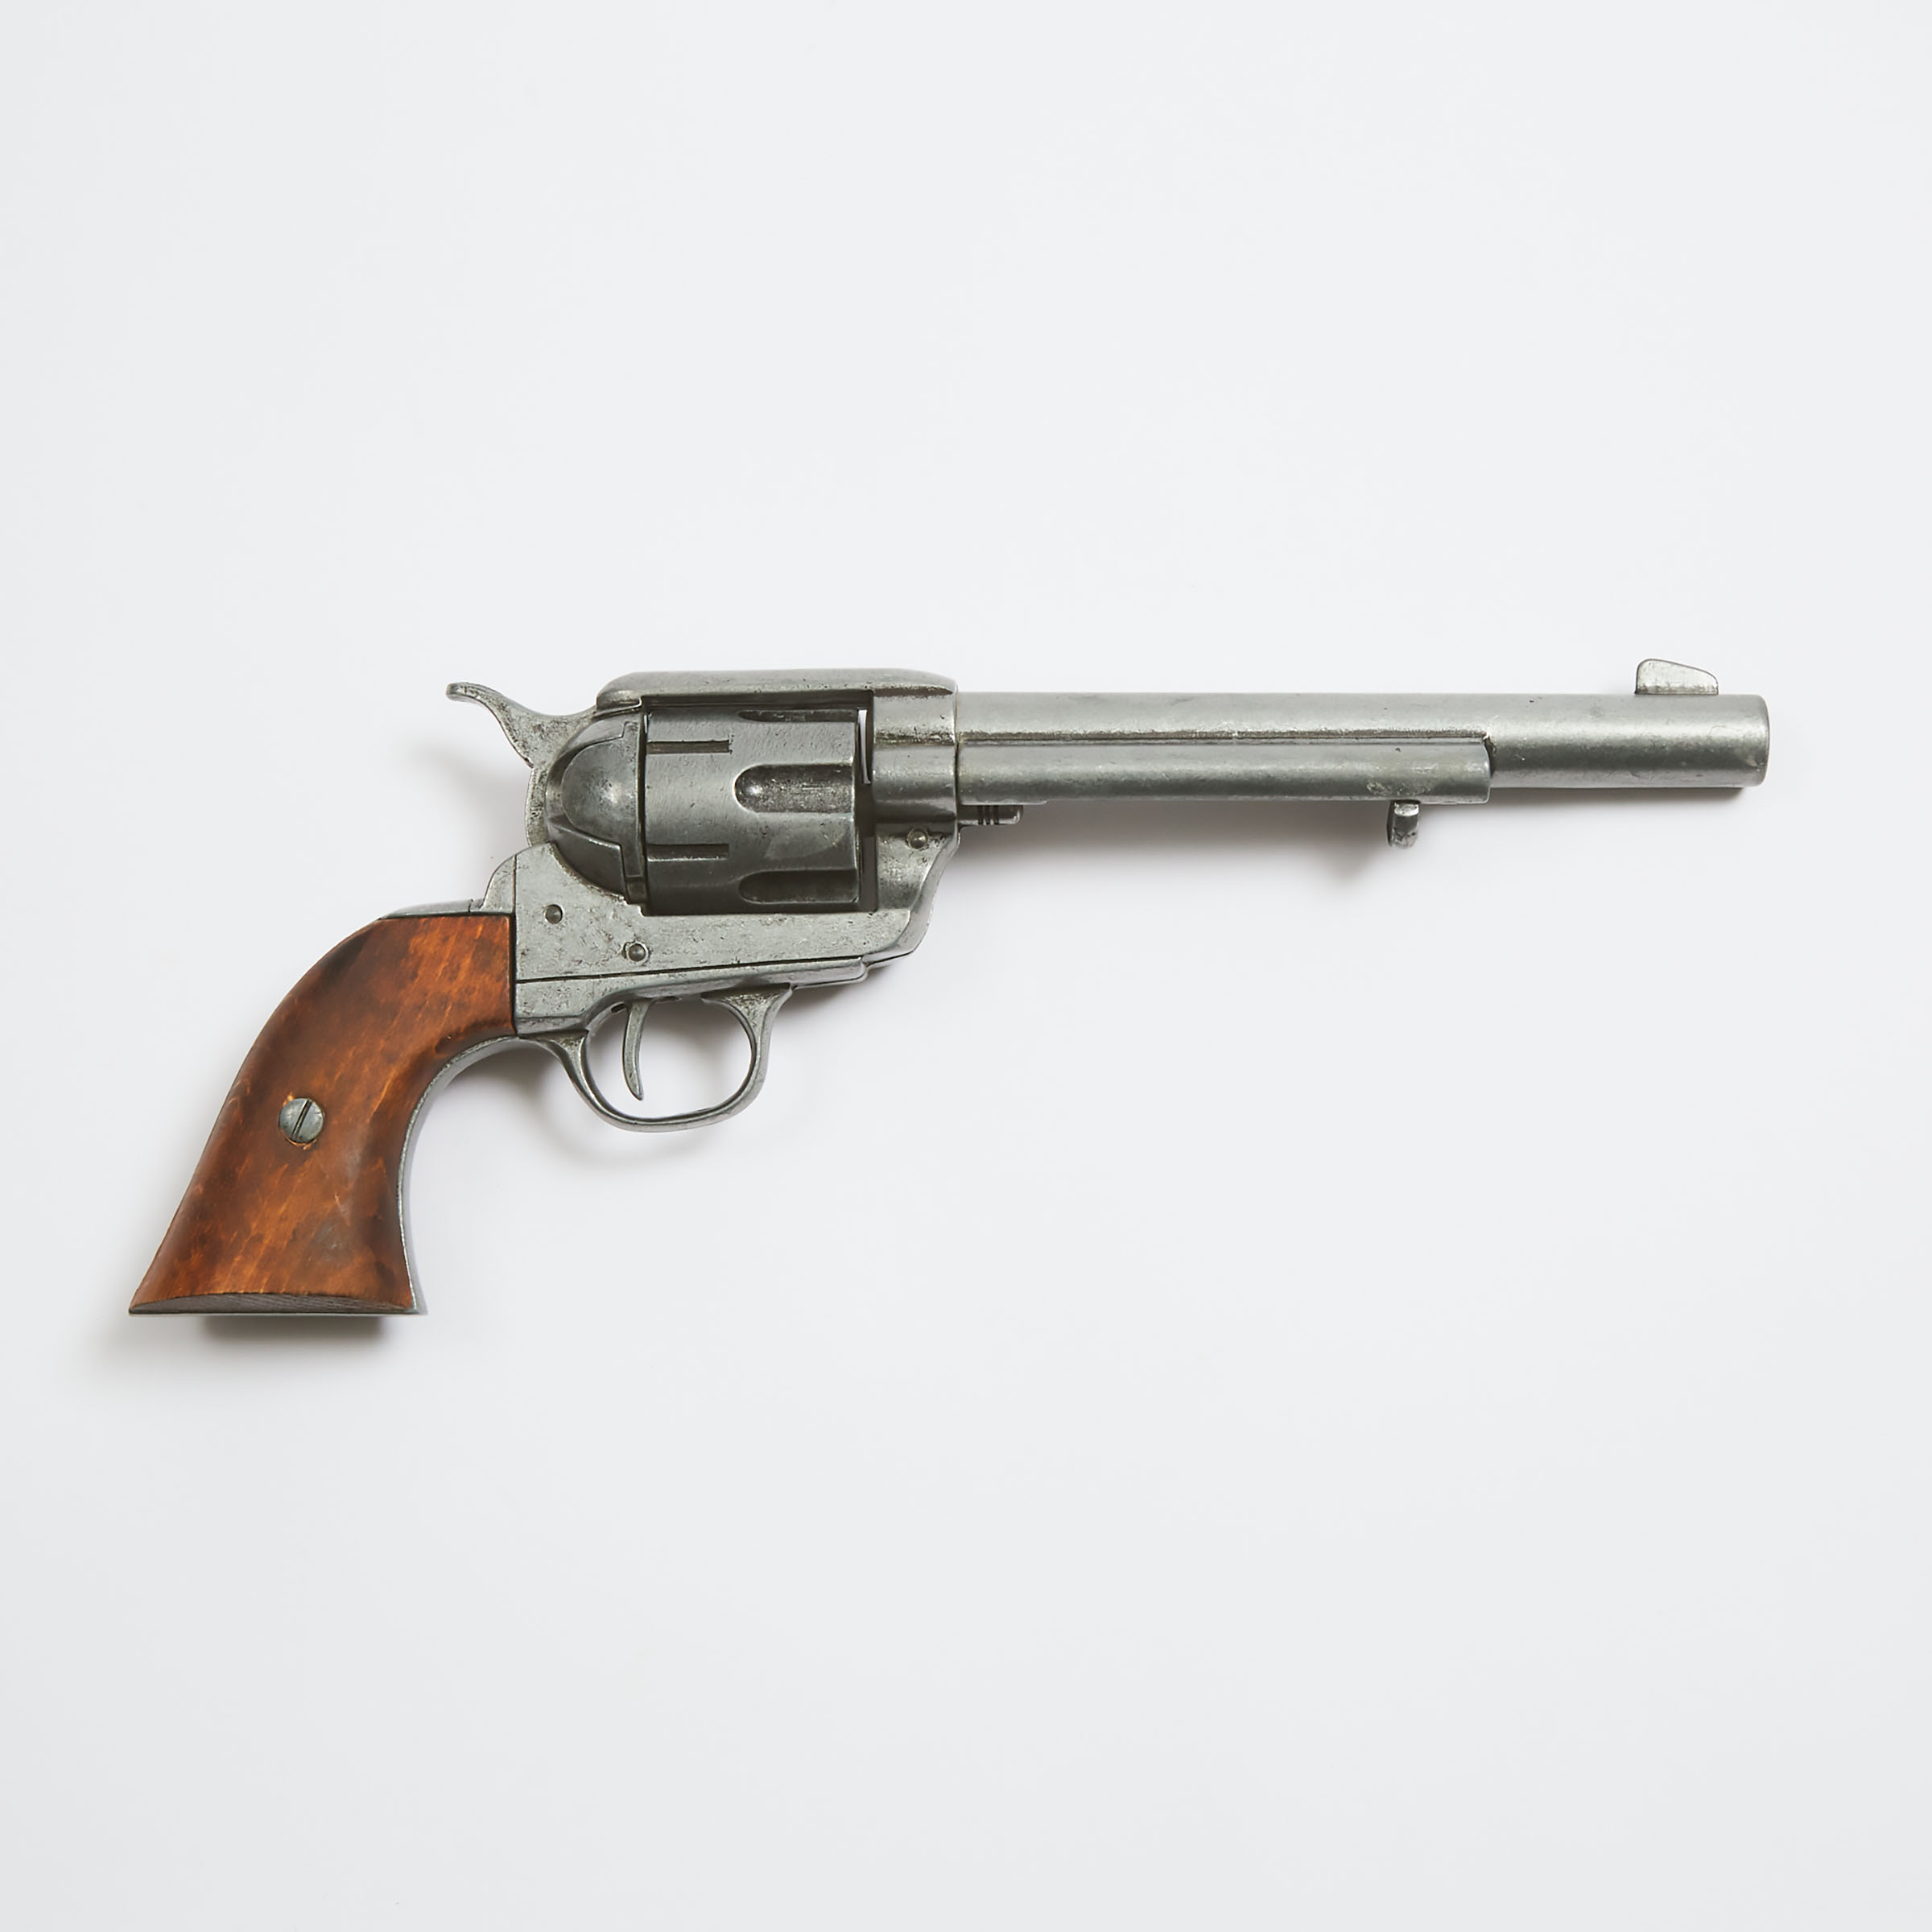 Replica Cap Gun Modelled as a Colt 'Peacemaker' Revolver, mid 20th century